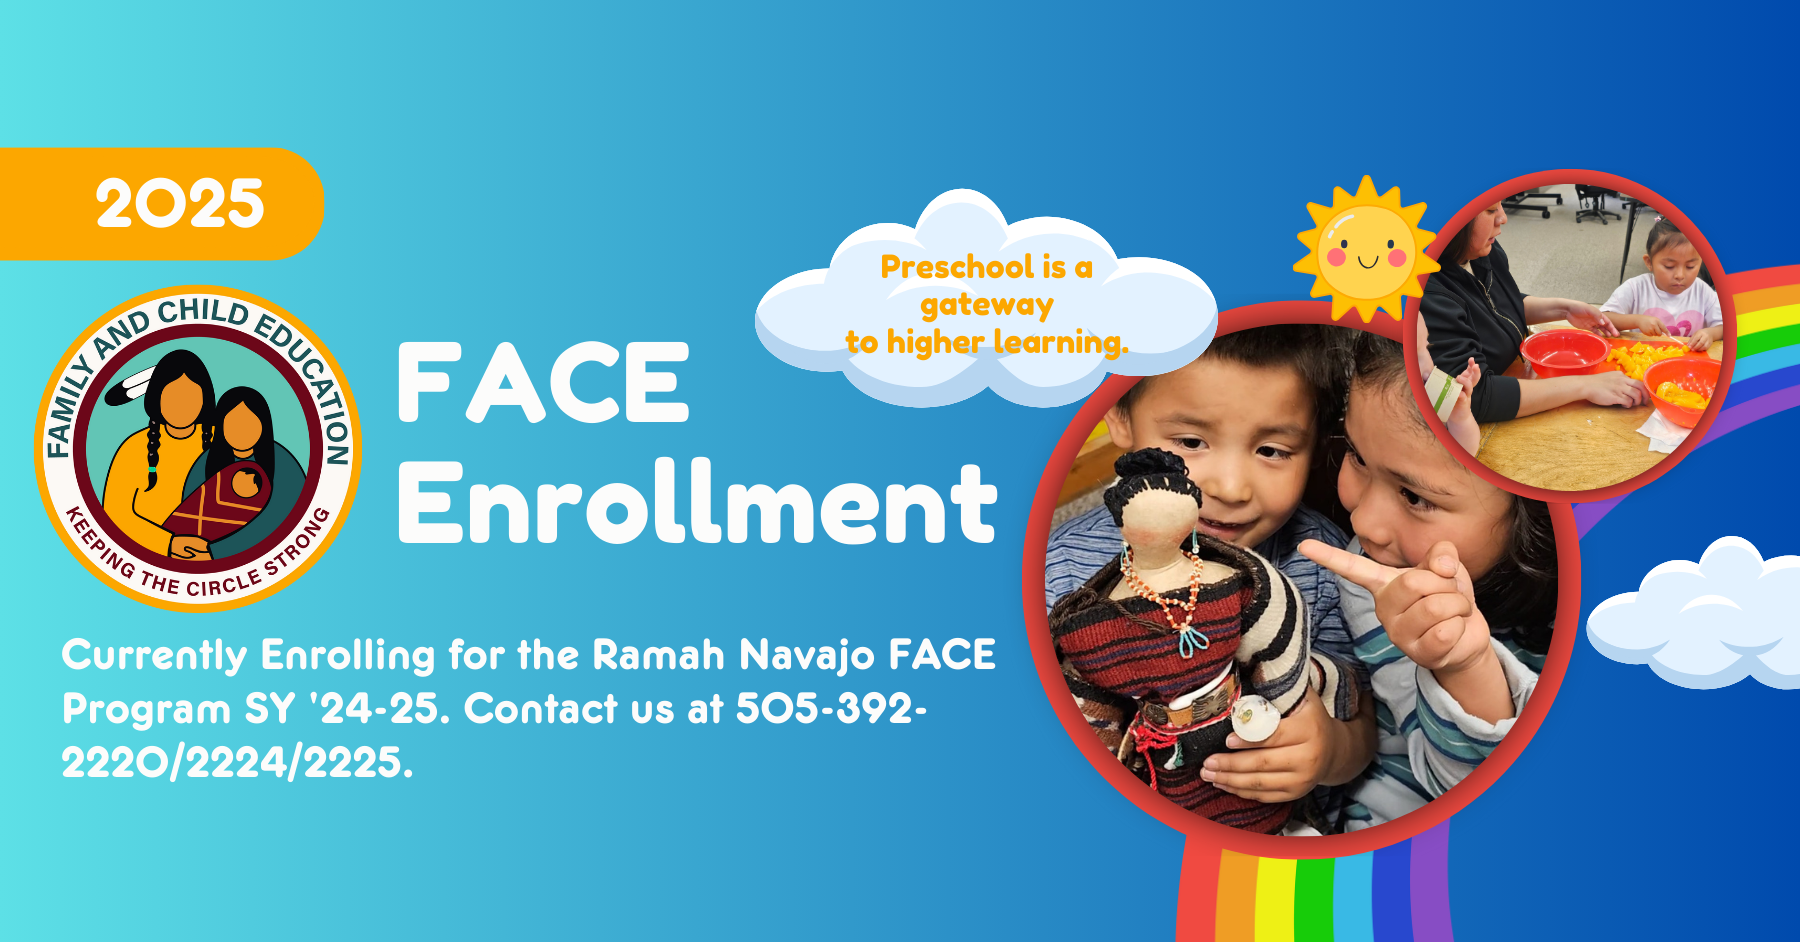 FACE enrollment